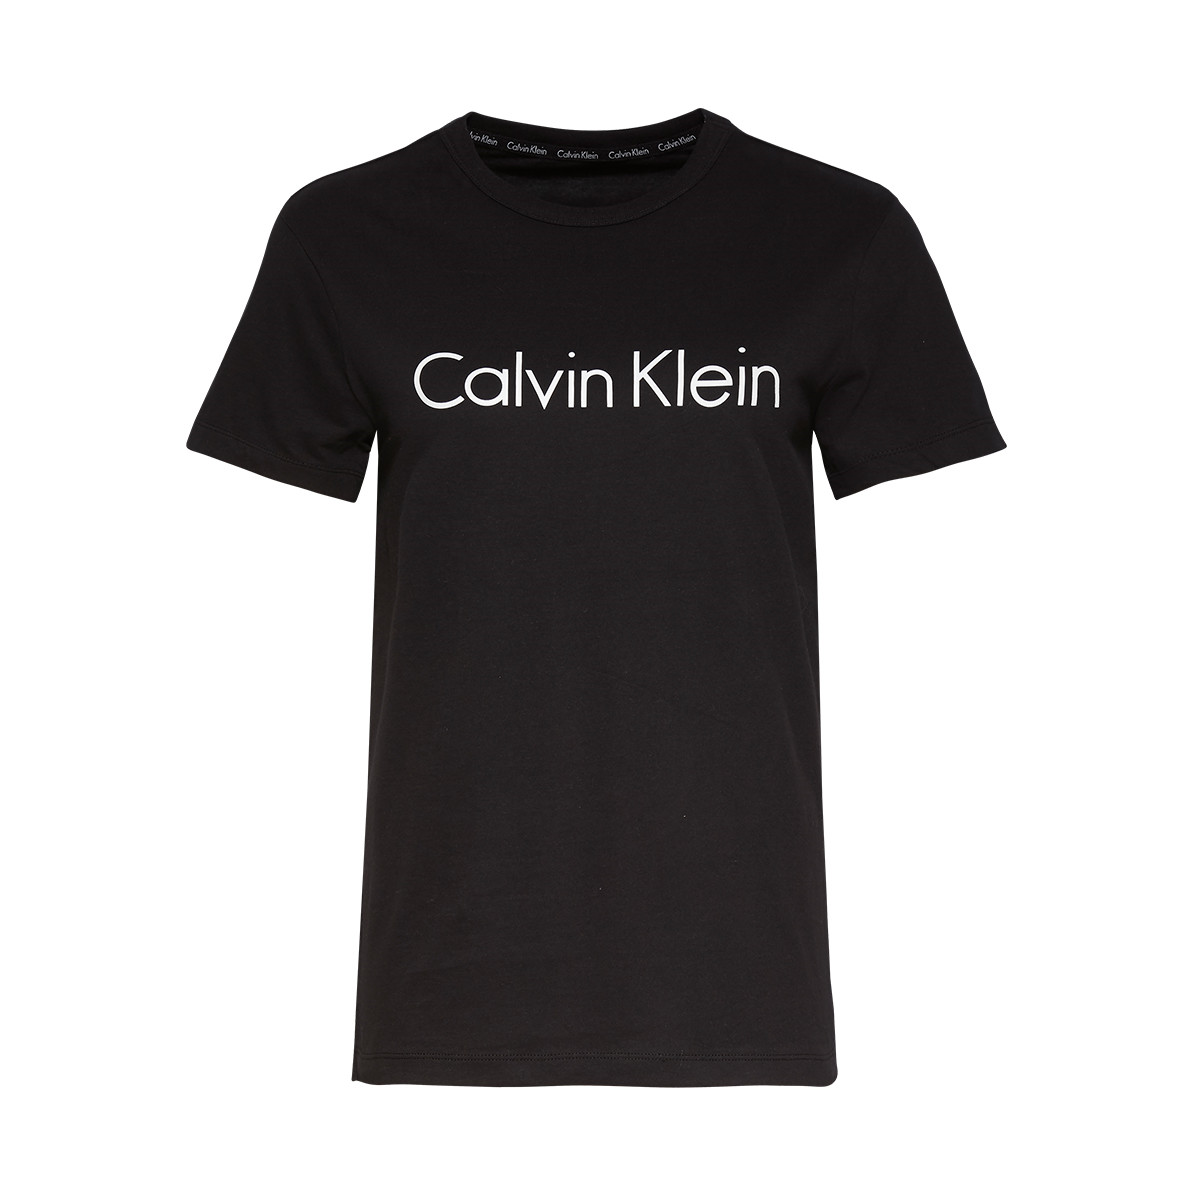 Calvin Klein T-shirt S, Farve: Sort, Størrelse: XS, Dame